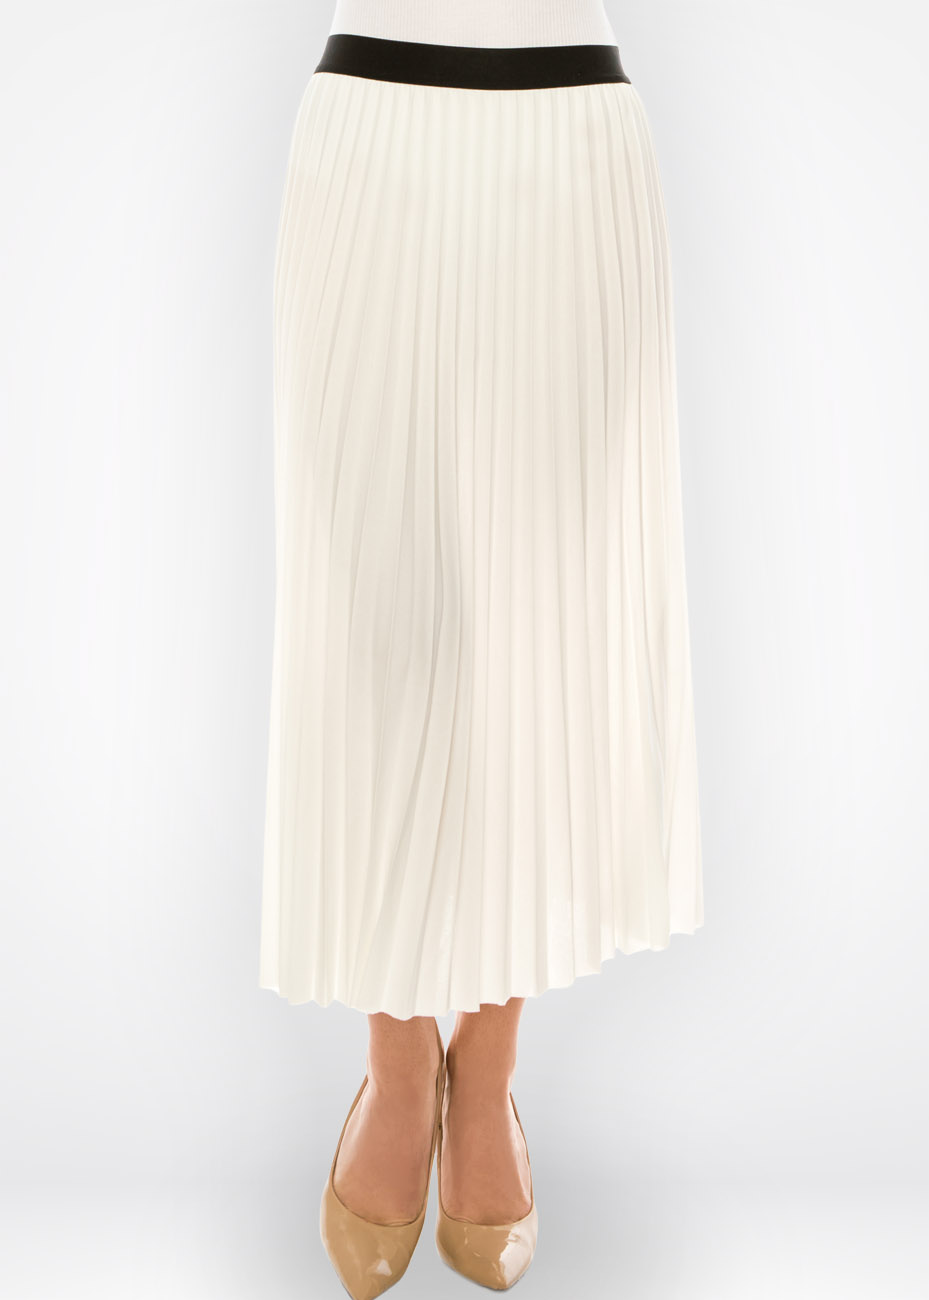 Classic Pleated White Skirt | Modest Women Clothing - YAL New York